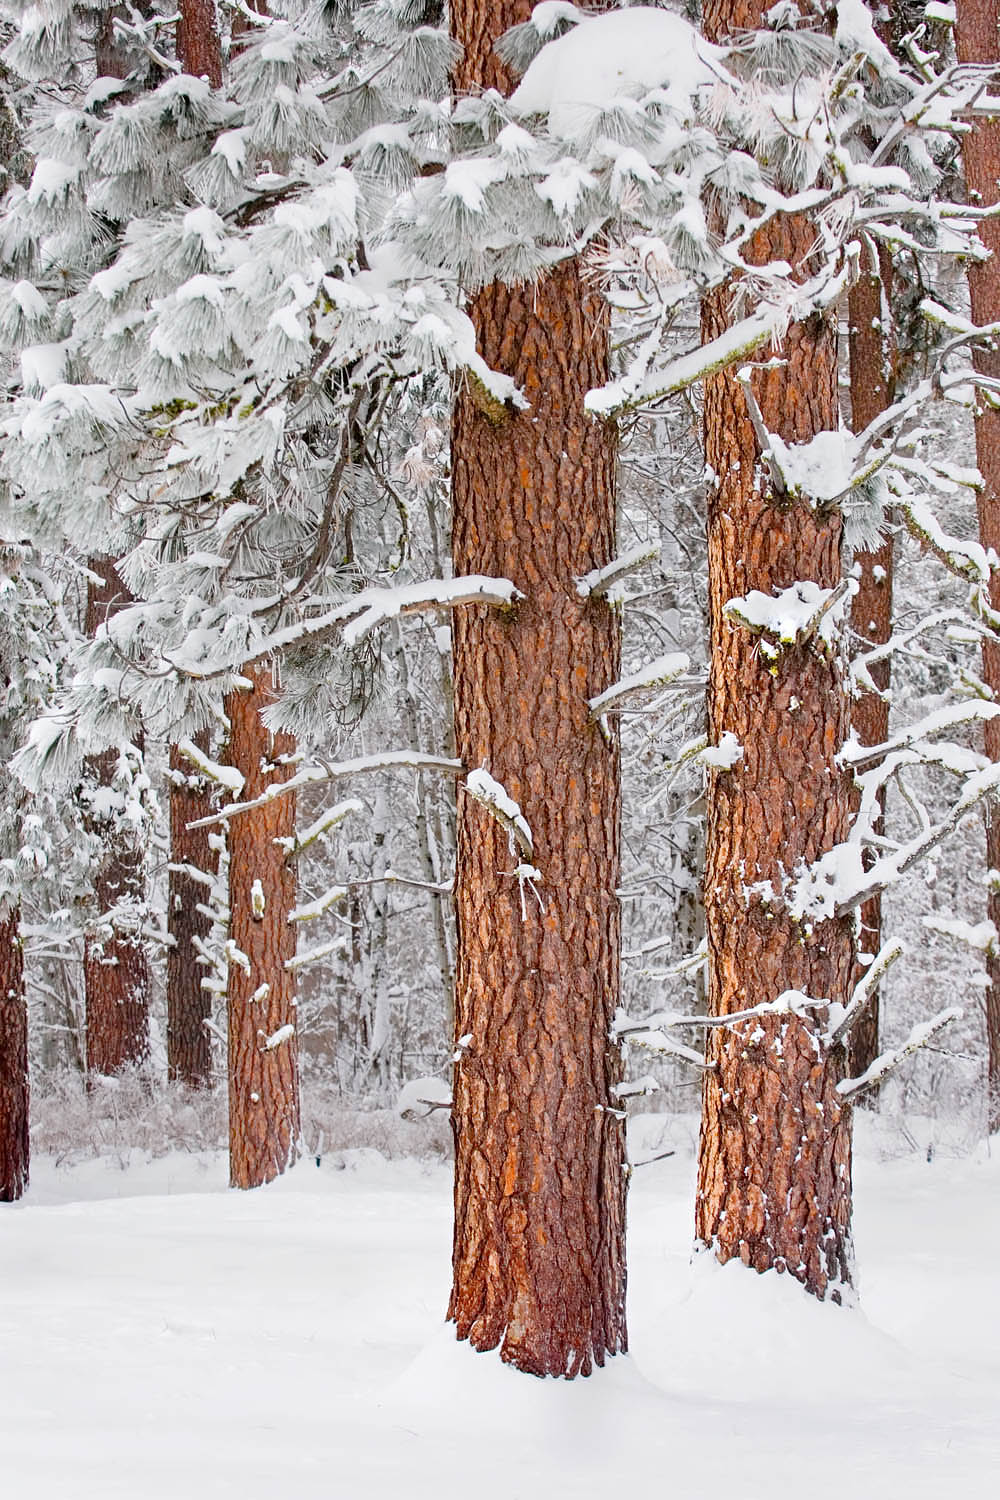 Frost covered needles on Ponderosa Pine trees (Pinus ponderosa), Methow Valley Washington #15754